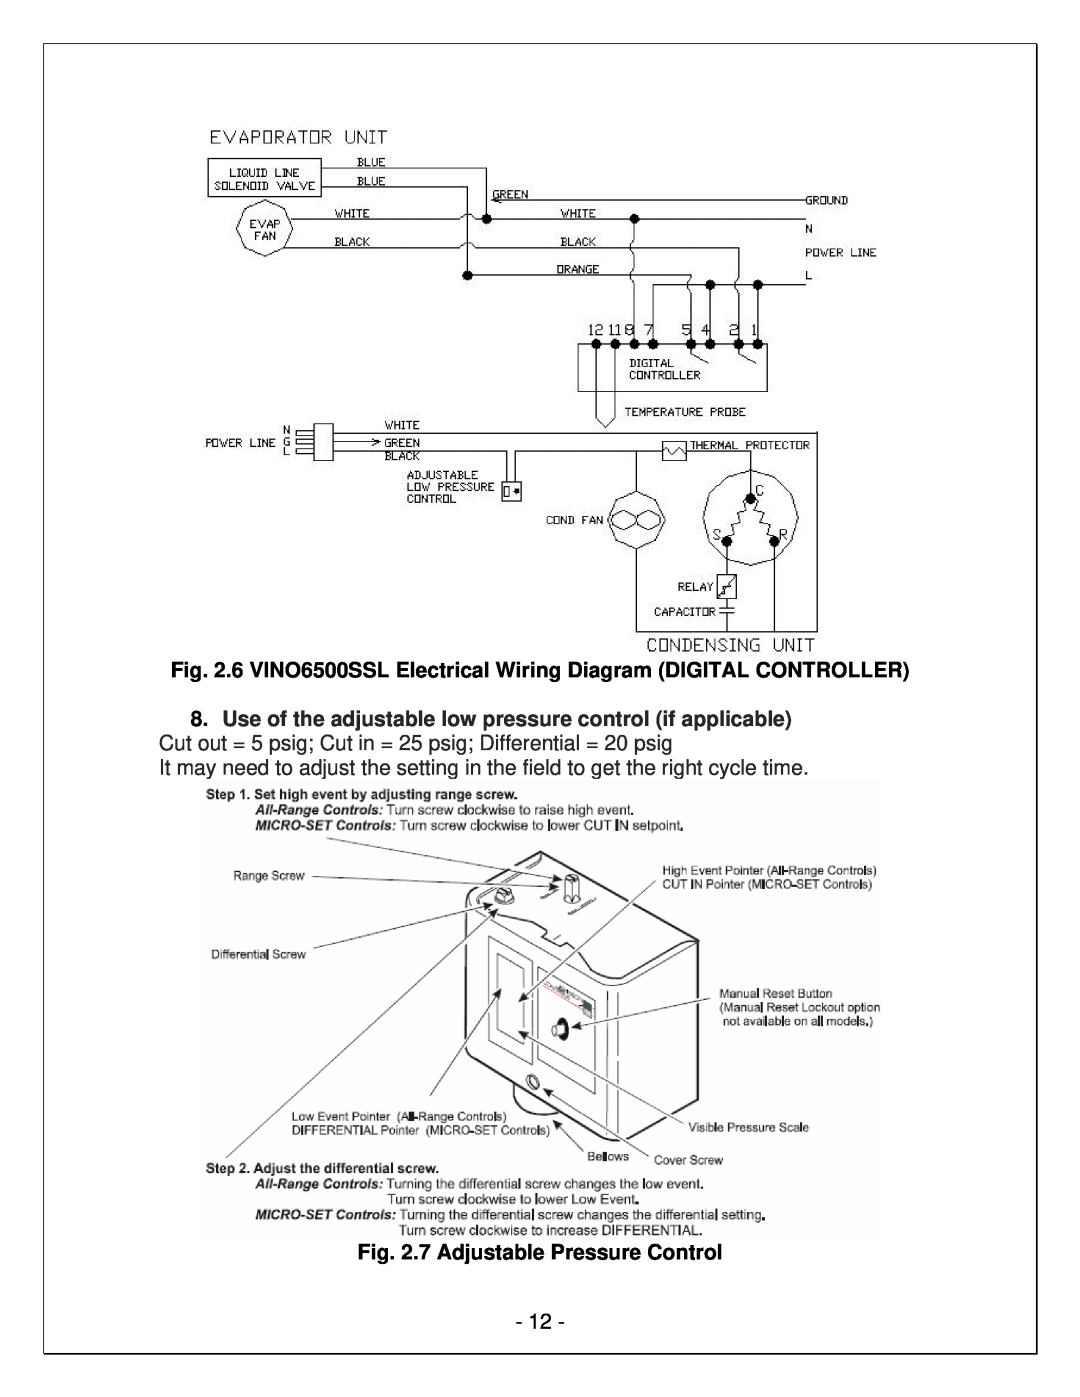 Vinotemp VINO-6500SSL, WM-65SFCL 6 VINO6500SSL Electrical Wiring Diagram DIGITAL CONTROLLER, 7 Adjustable Pressure Control 